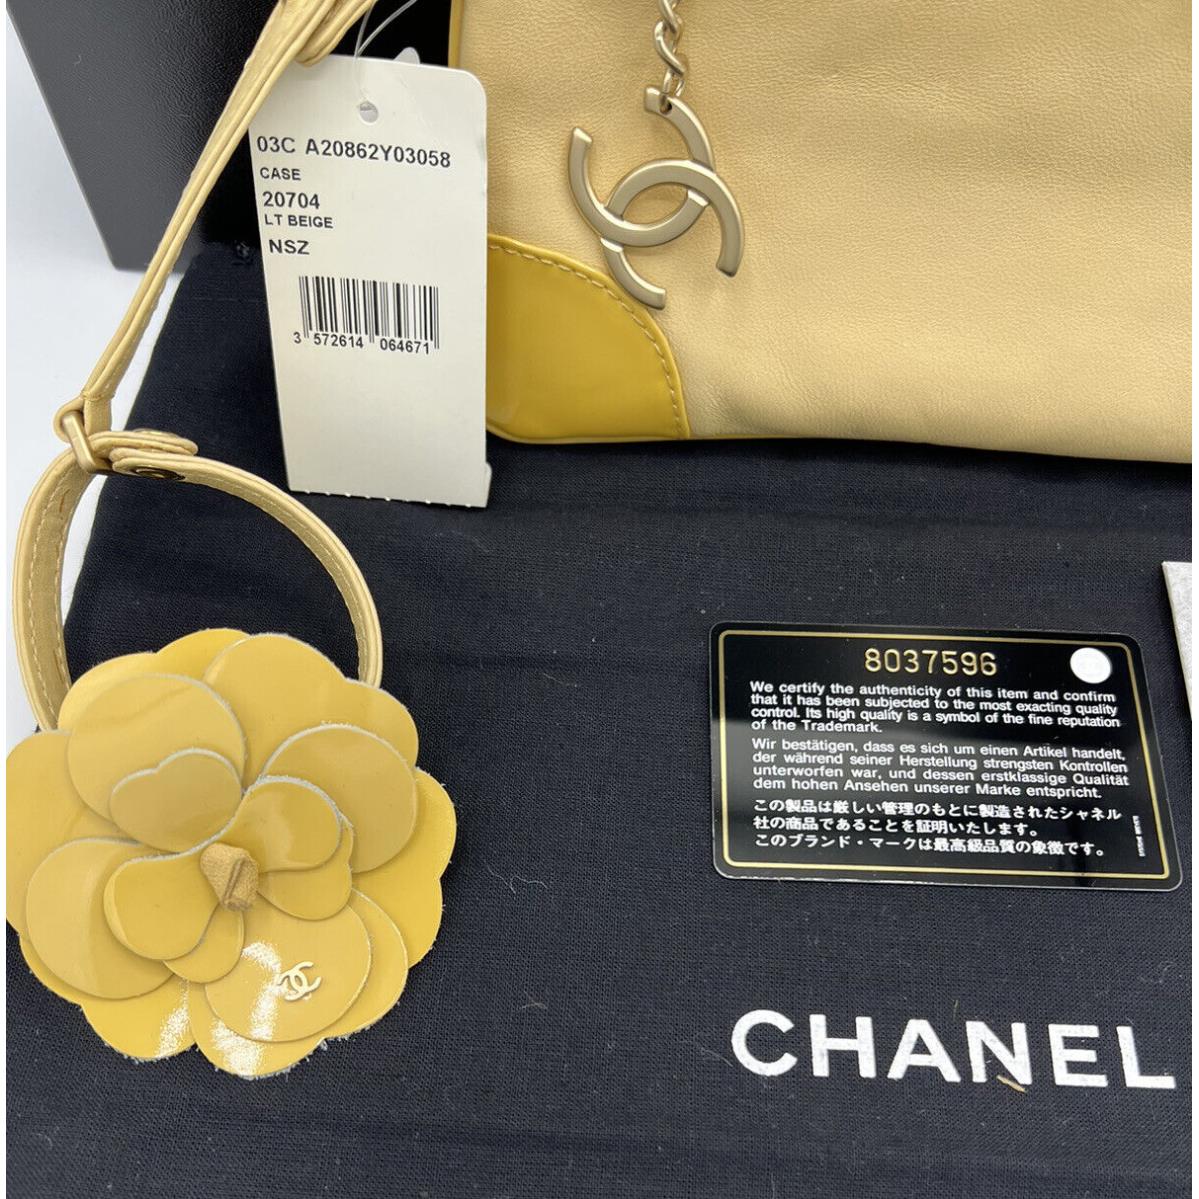 Chanel Box Set Long Leather Wristlet Clutch Bag Patent Beige